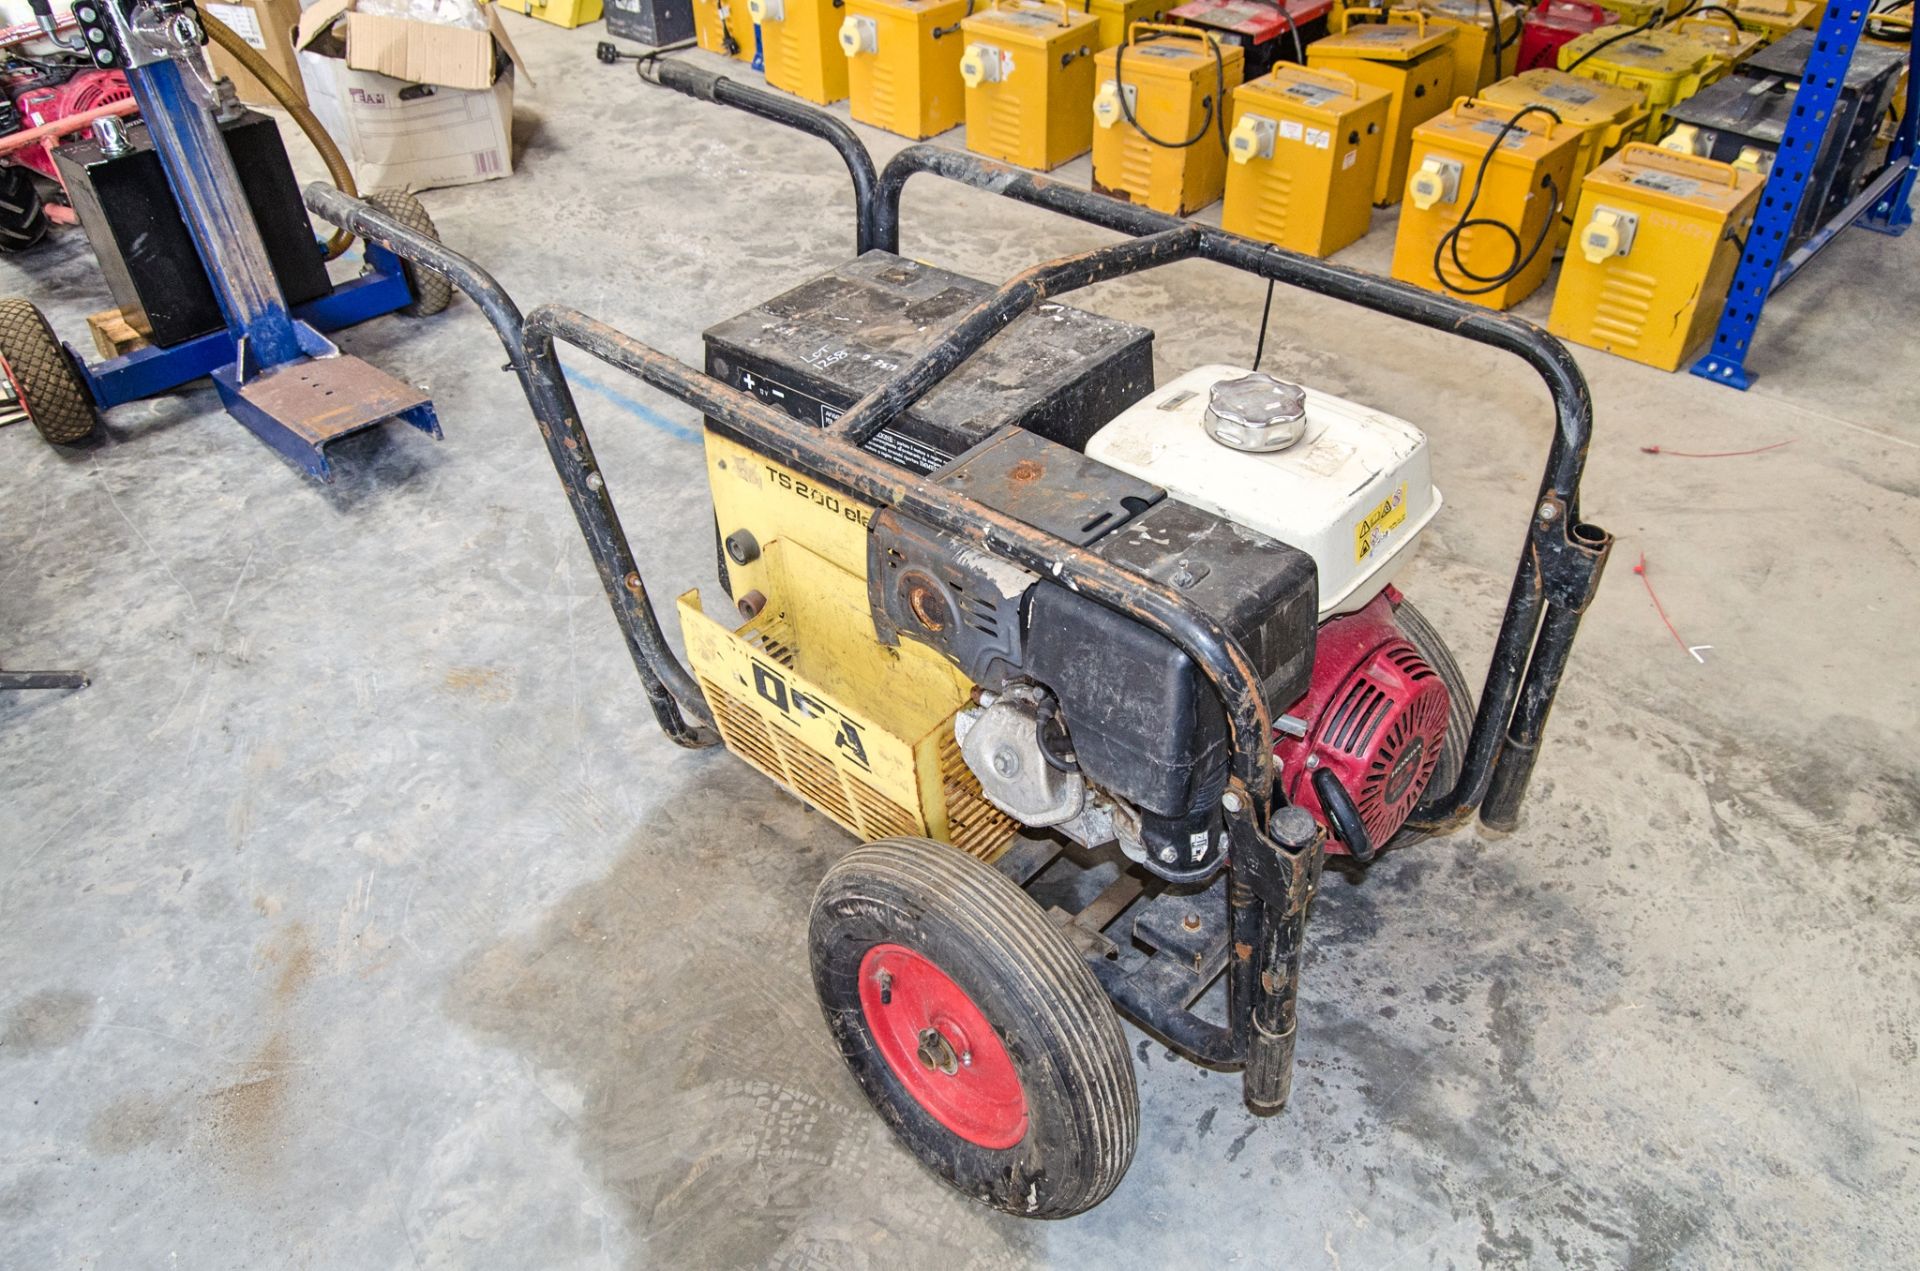 Mosa TS200 petrol driven welder/generator 11021405 - Image 2 of 2